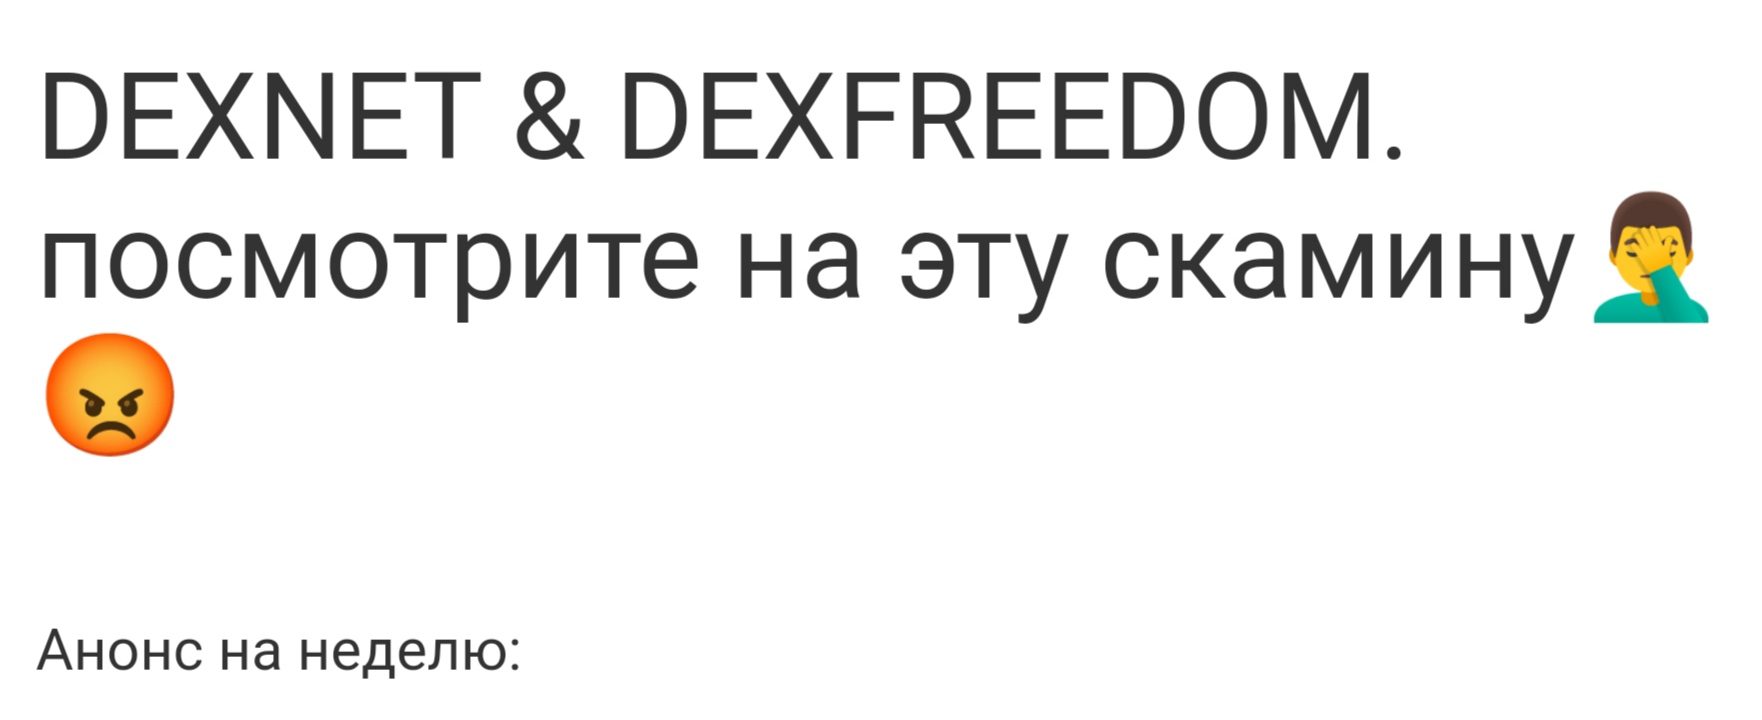 Dex Freedom отзывы